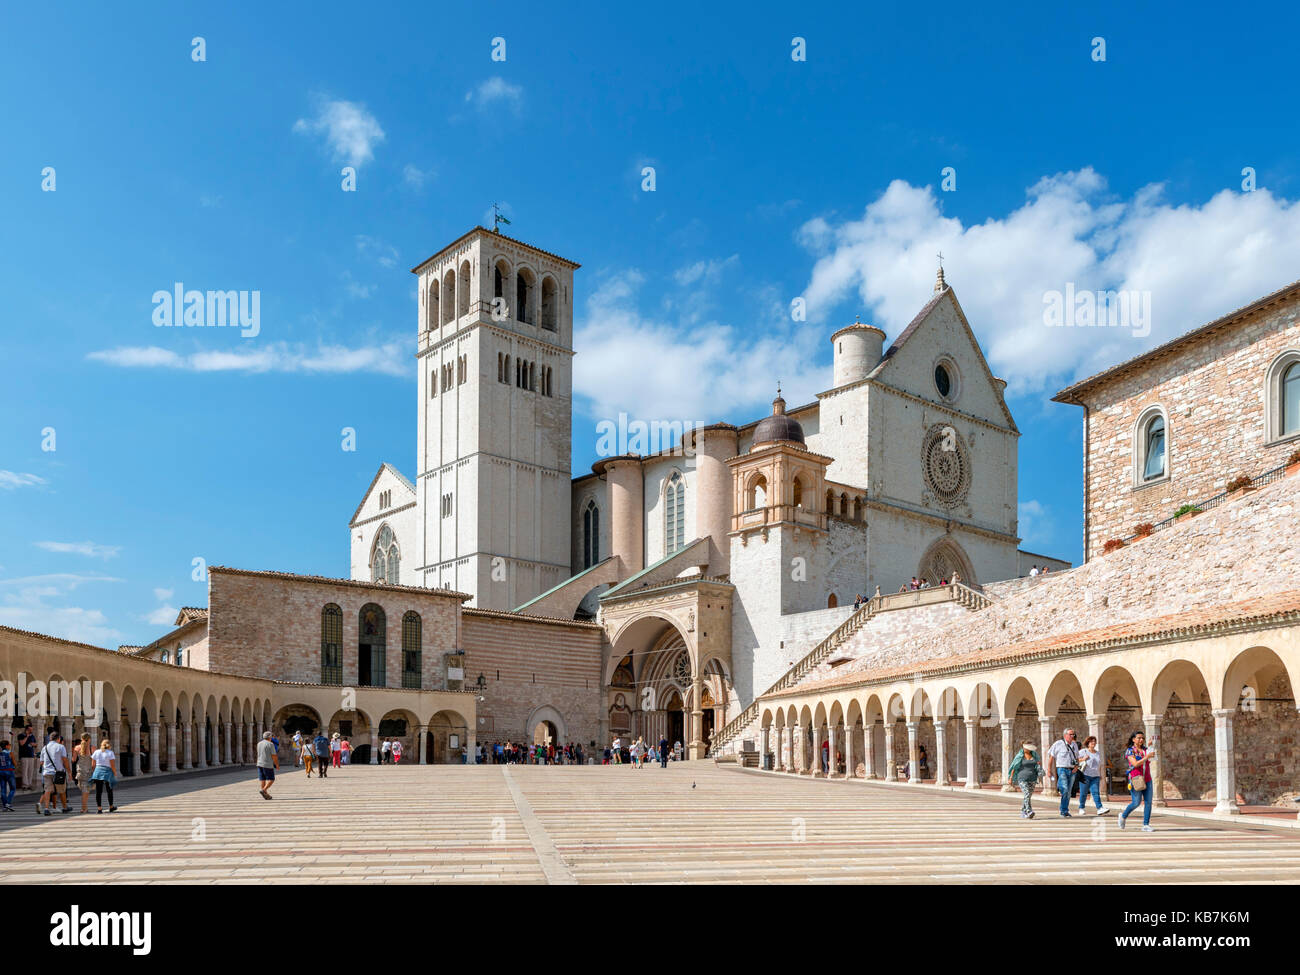 Die Basilica di San Francesco (die Basilika des hl. Franz von Assisi) von der Piazza Inferiore di San Francesco, Assisi, Umbrien, Italien Stockfoto